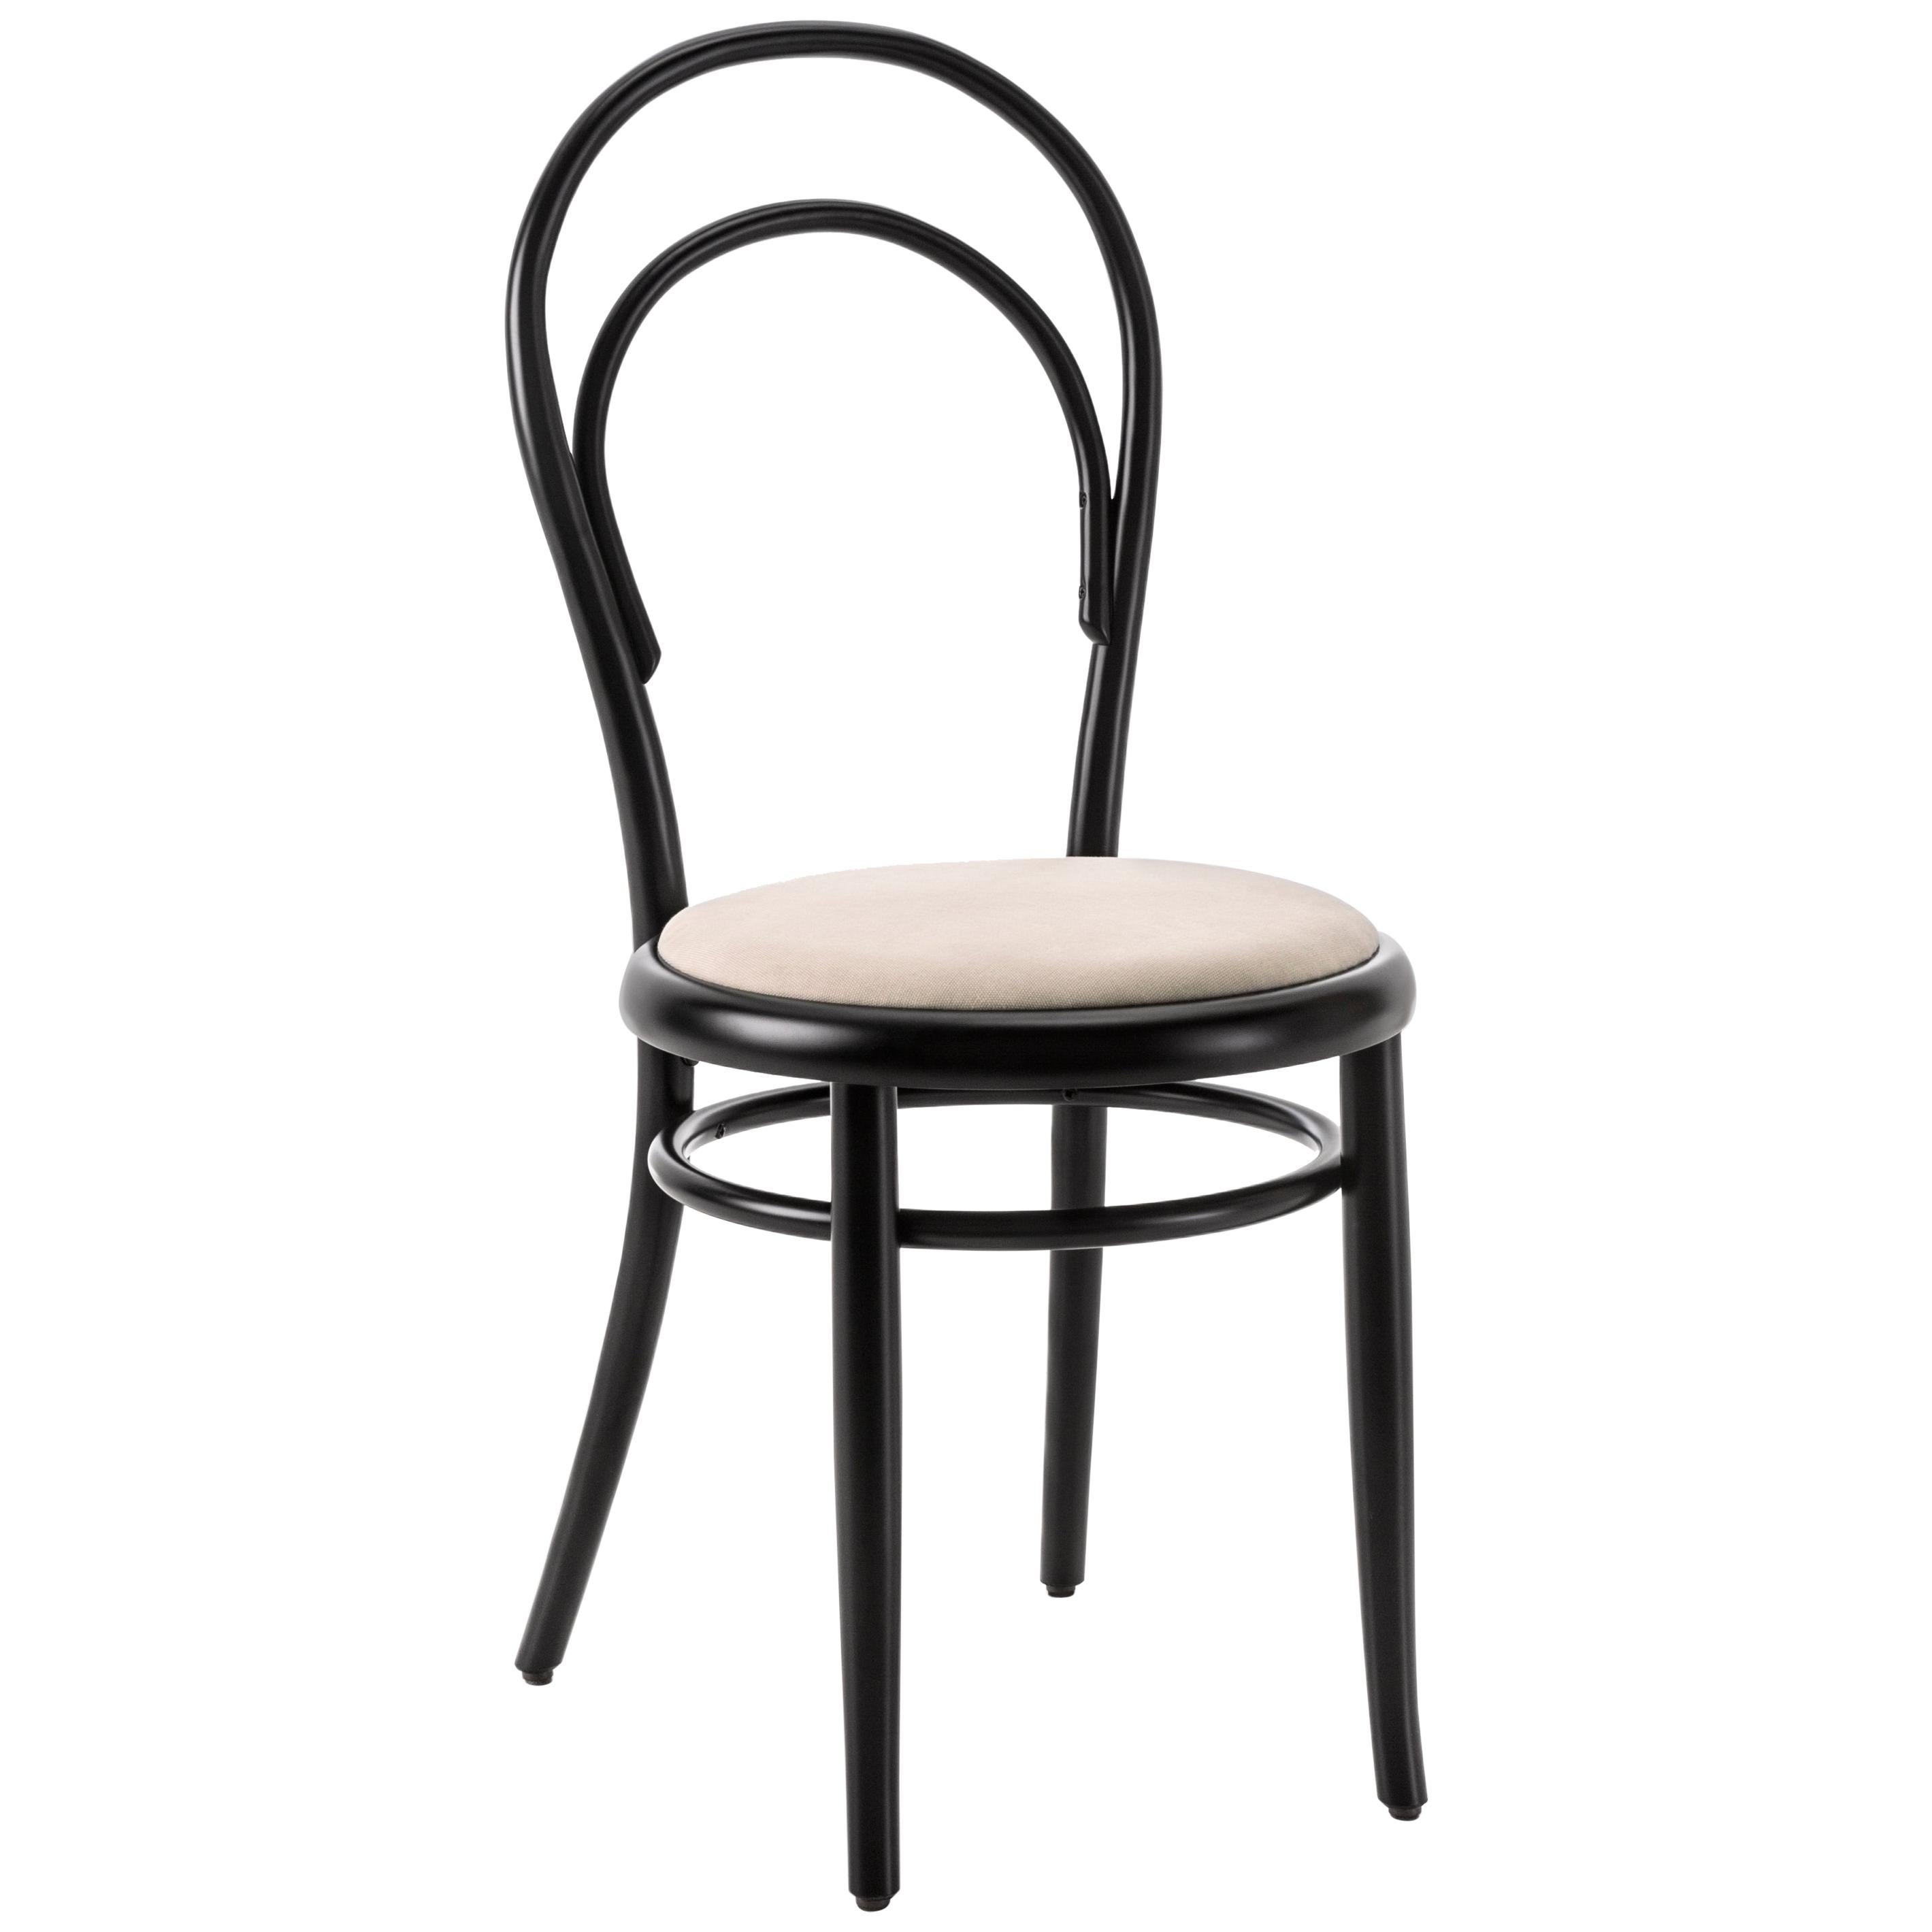 Gebrüder Thonet Vienna GmbH N.14 Chair in Black with Upholstered Seat